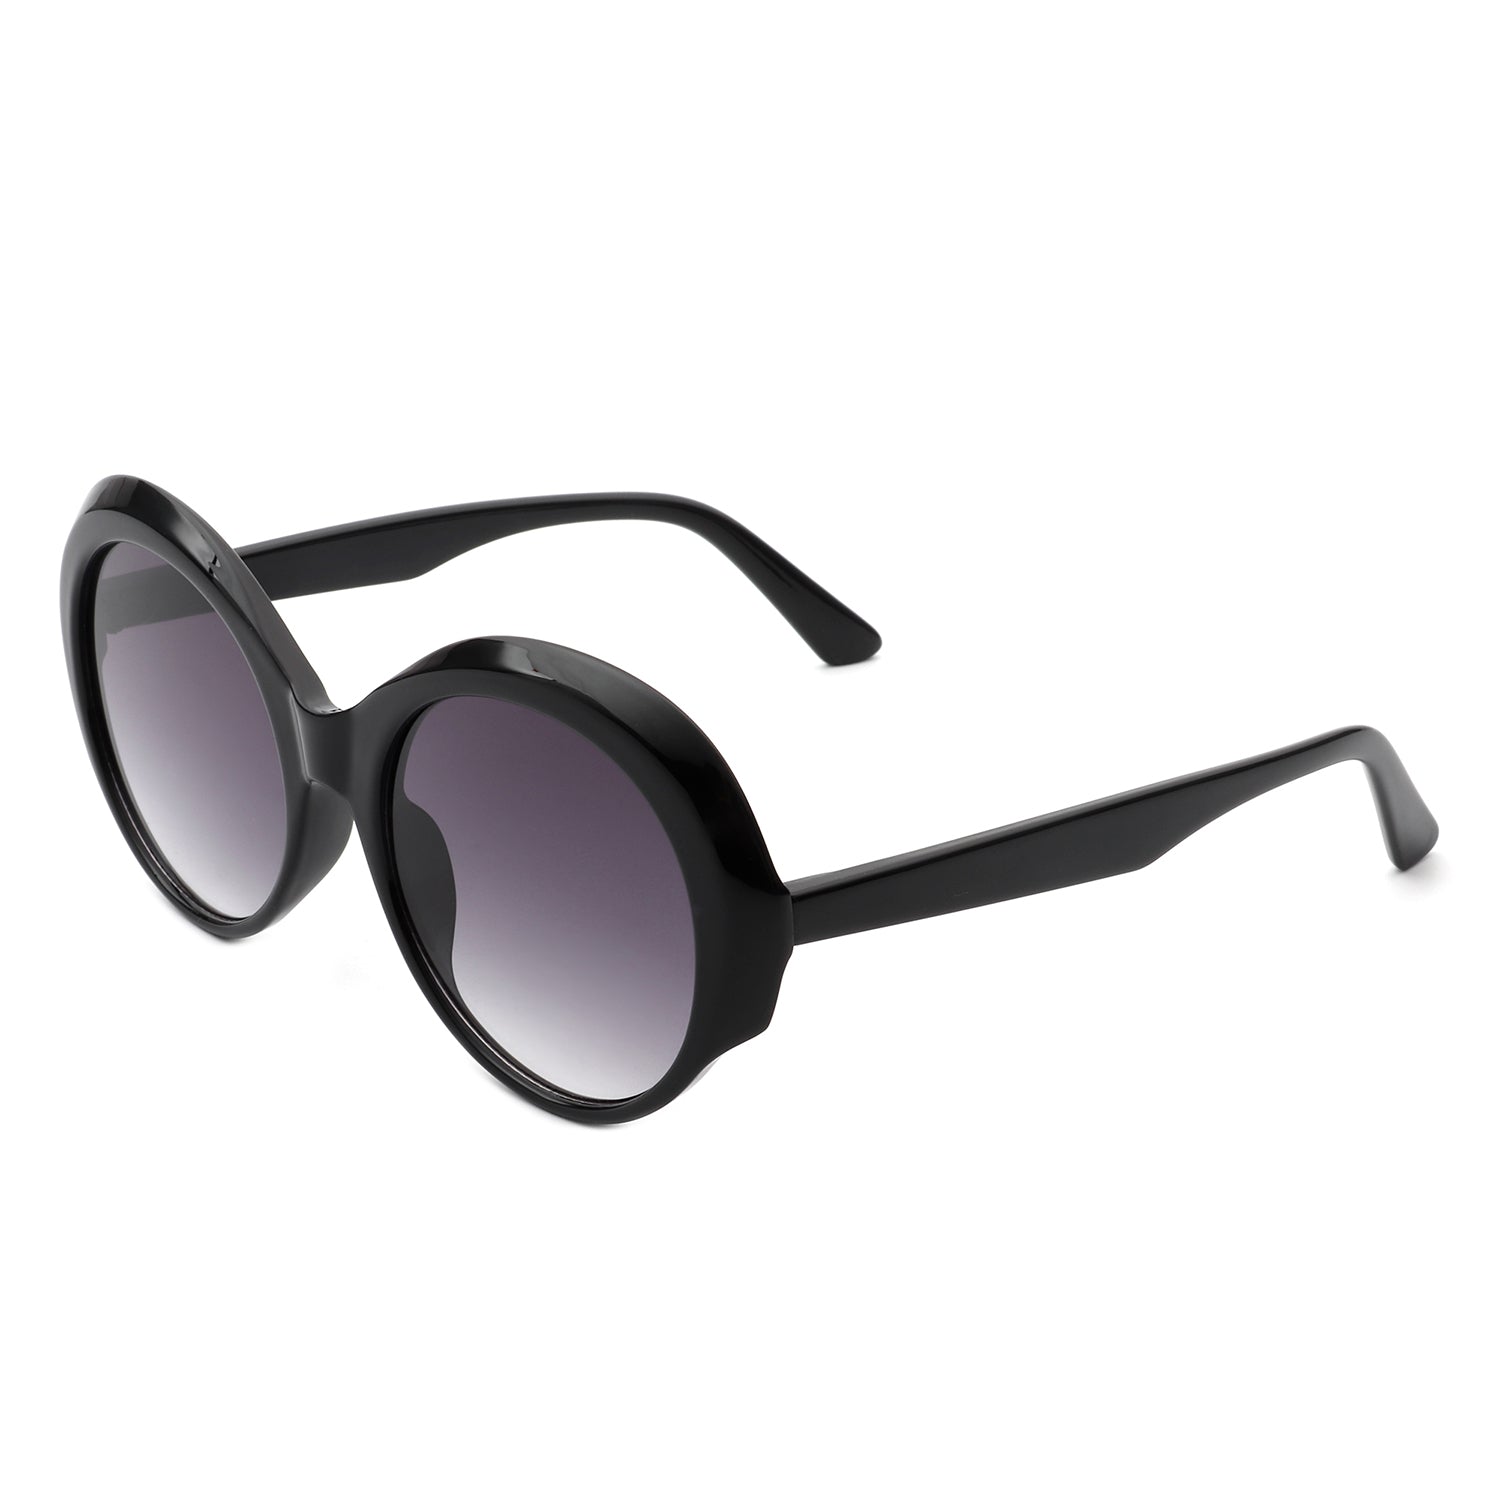 HS1131 - Women Round Oversize Circle Chunky Fashion Sunglasses